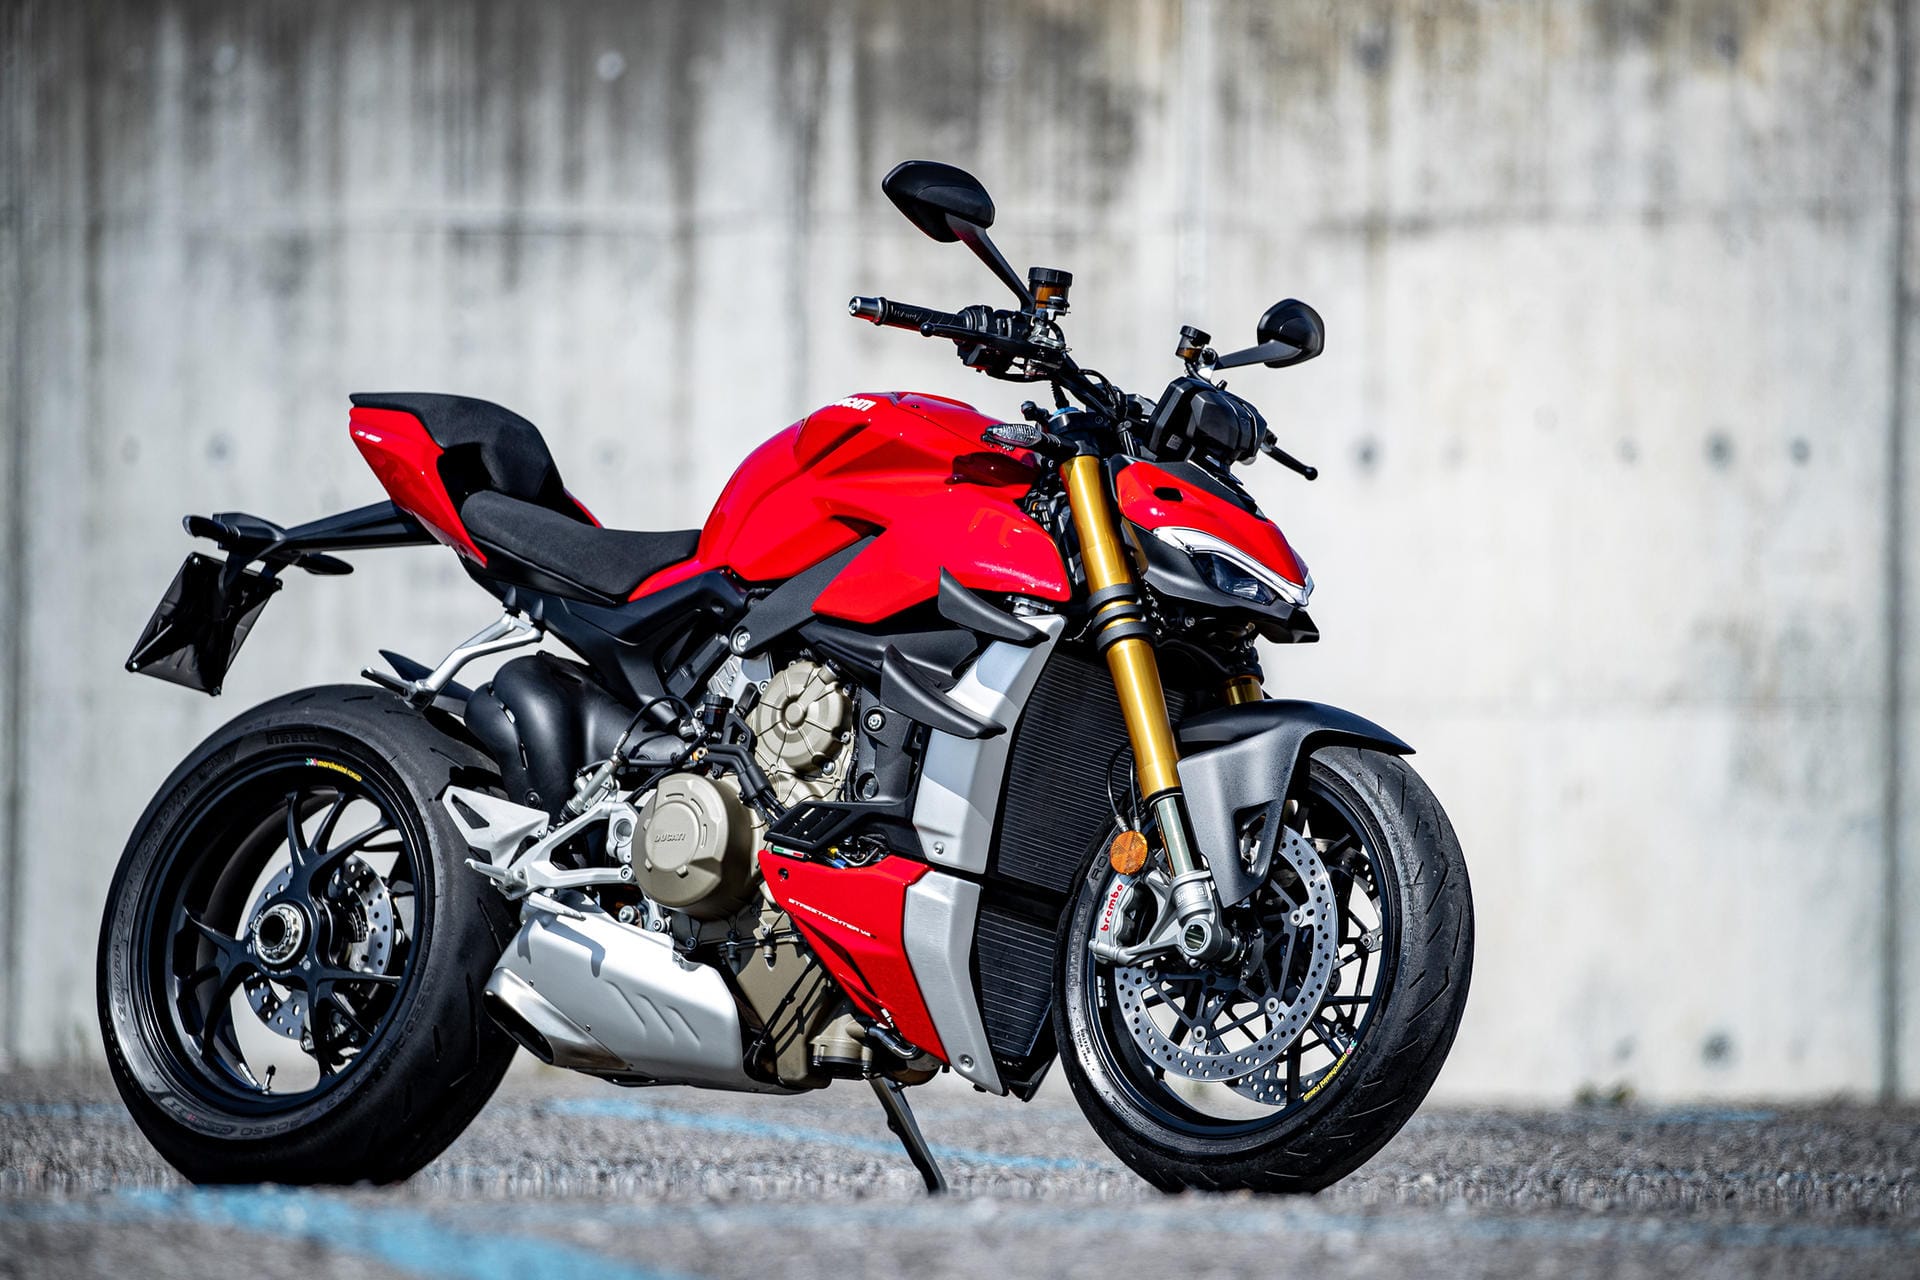 Ducati Streetfighter V4: "Das ultimative Naked-Bike", verspricht Ducati. Fahrwerk und Motor (208 PS) stammen aus dem Superbike Panigale V4. Preis: ab 19.900 Euro